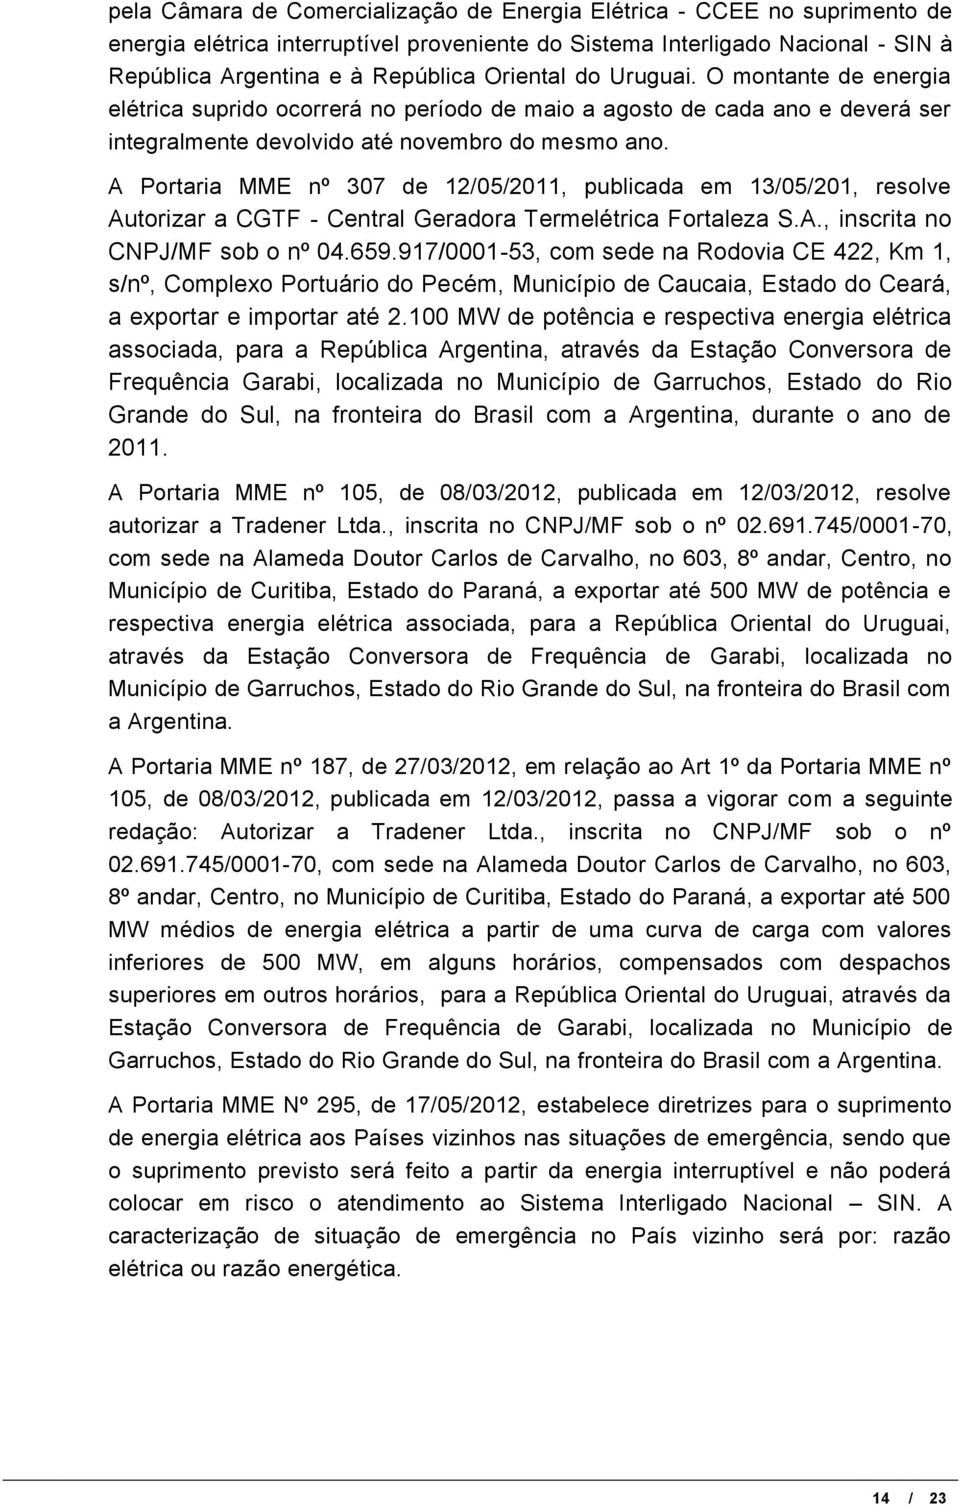 A Portaria MME nº 307 de 12/05/2011, publicada em 13/05/201, resolve Autorizar a CGTF - Central Geradora Termelétrica Fortaleza S.A., inscrita no CNPJ/MF sob o nº 04.659.